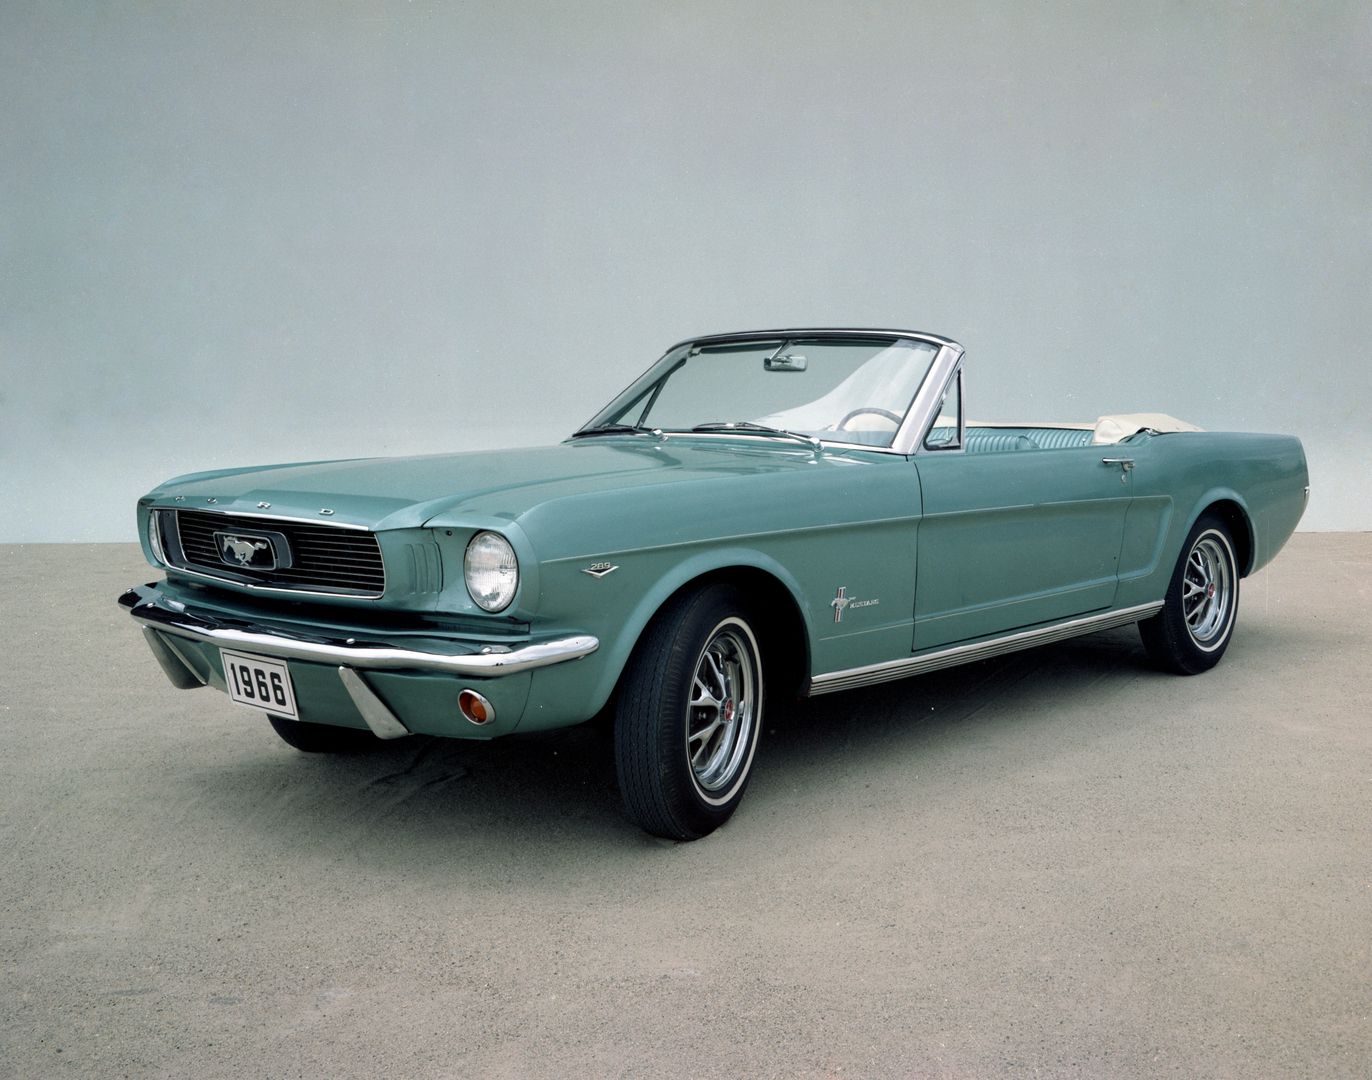 Green 1966 Ford Mustang convertible